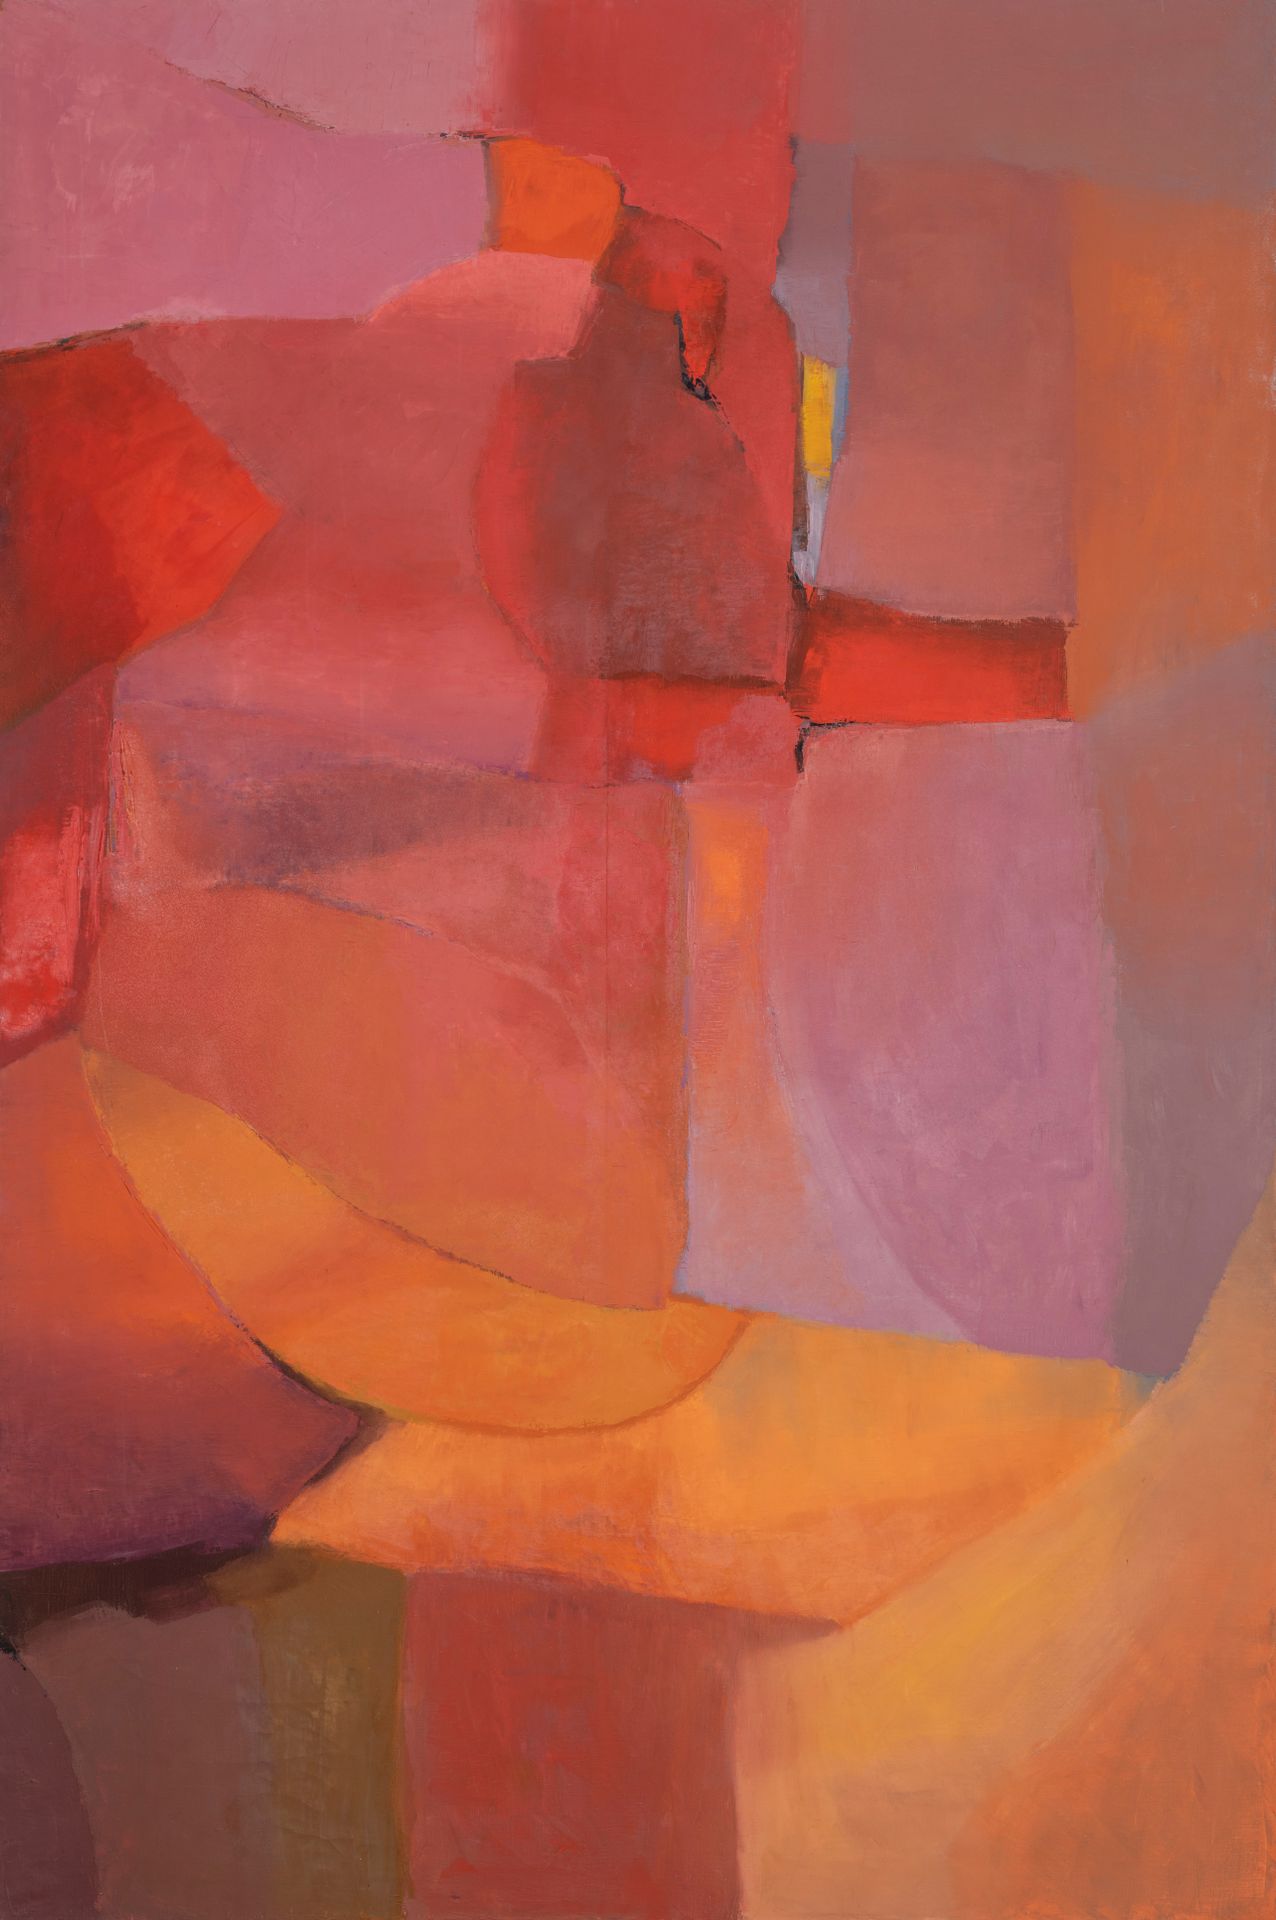 Null 米歇尔-法尔（1928-2009）。

橙色成分，1972年。

布面油画。背面有签名，日期为72。

195 x 130厘米。